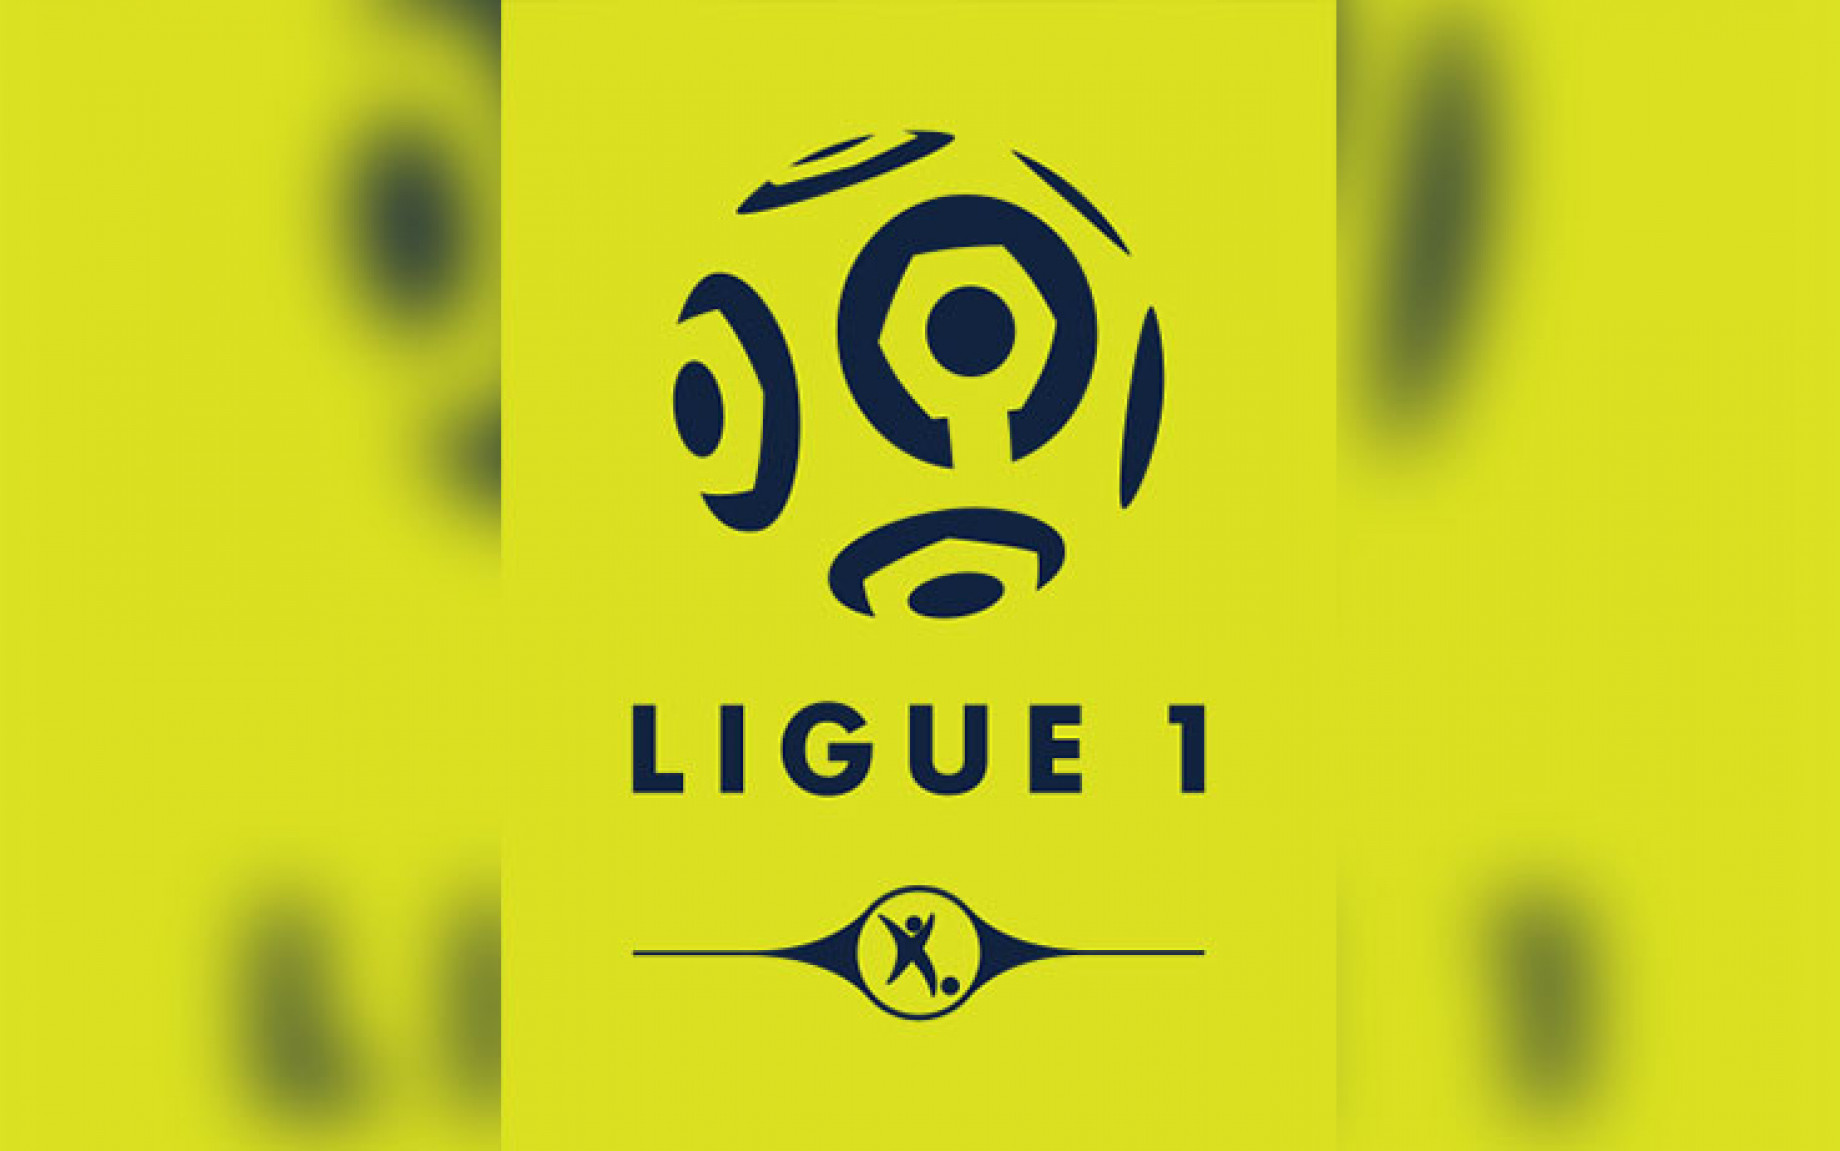 Ligue_1_logo.jpg